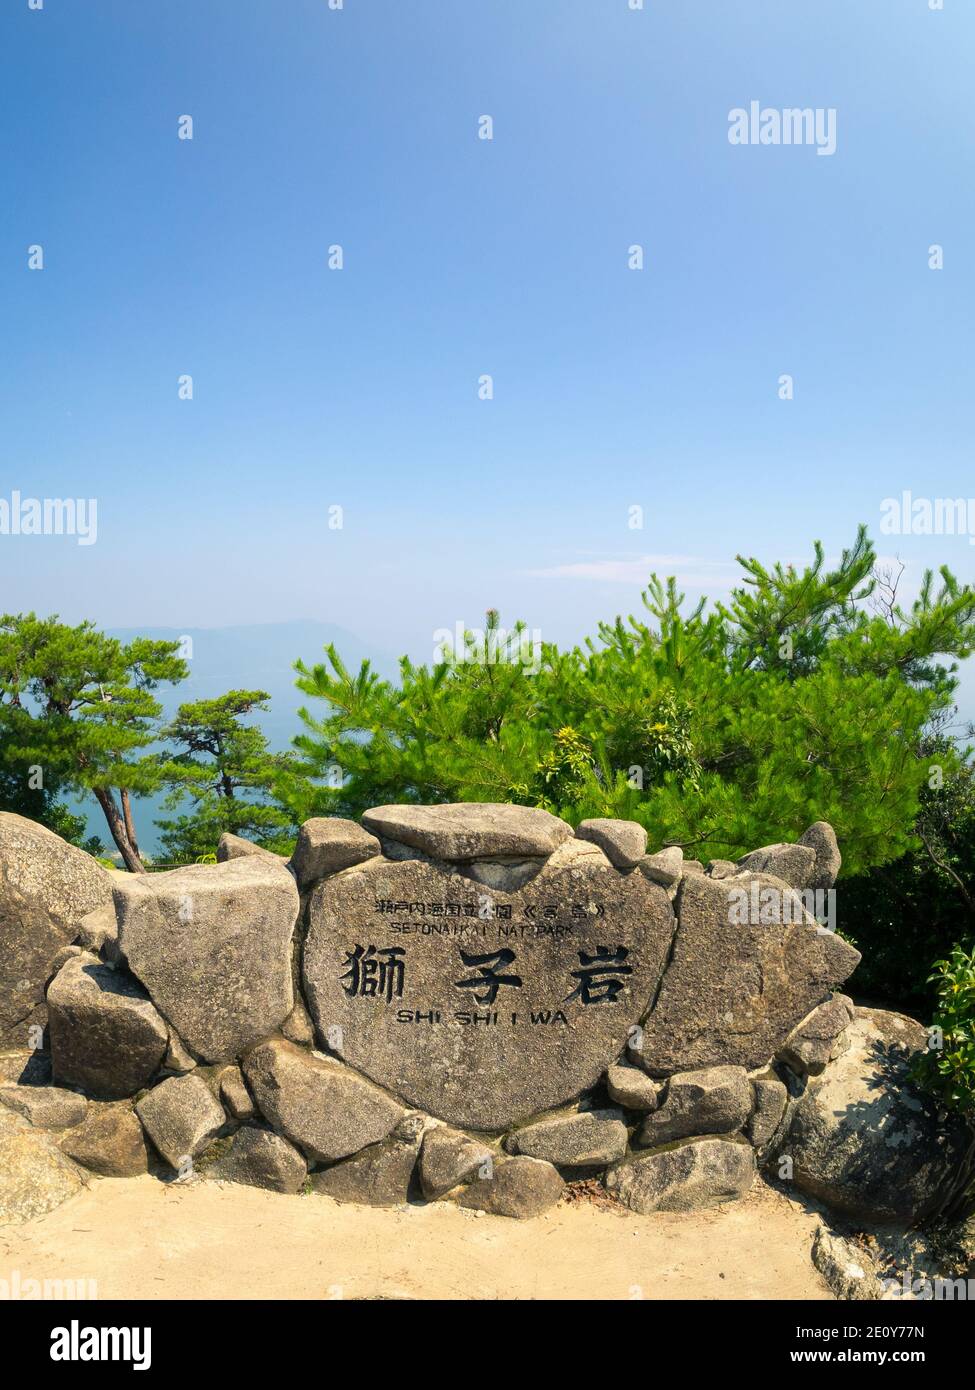 A marker for the Shishiiwa Observatory and Setonaikai National Park on Mount Misen, Miyajima Island (Itsukushima), Japan. Stock Photo